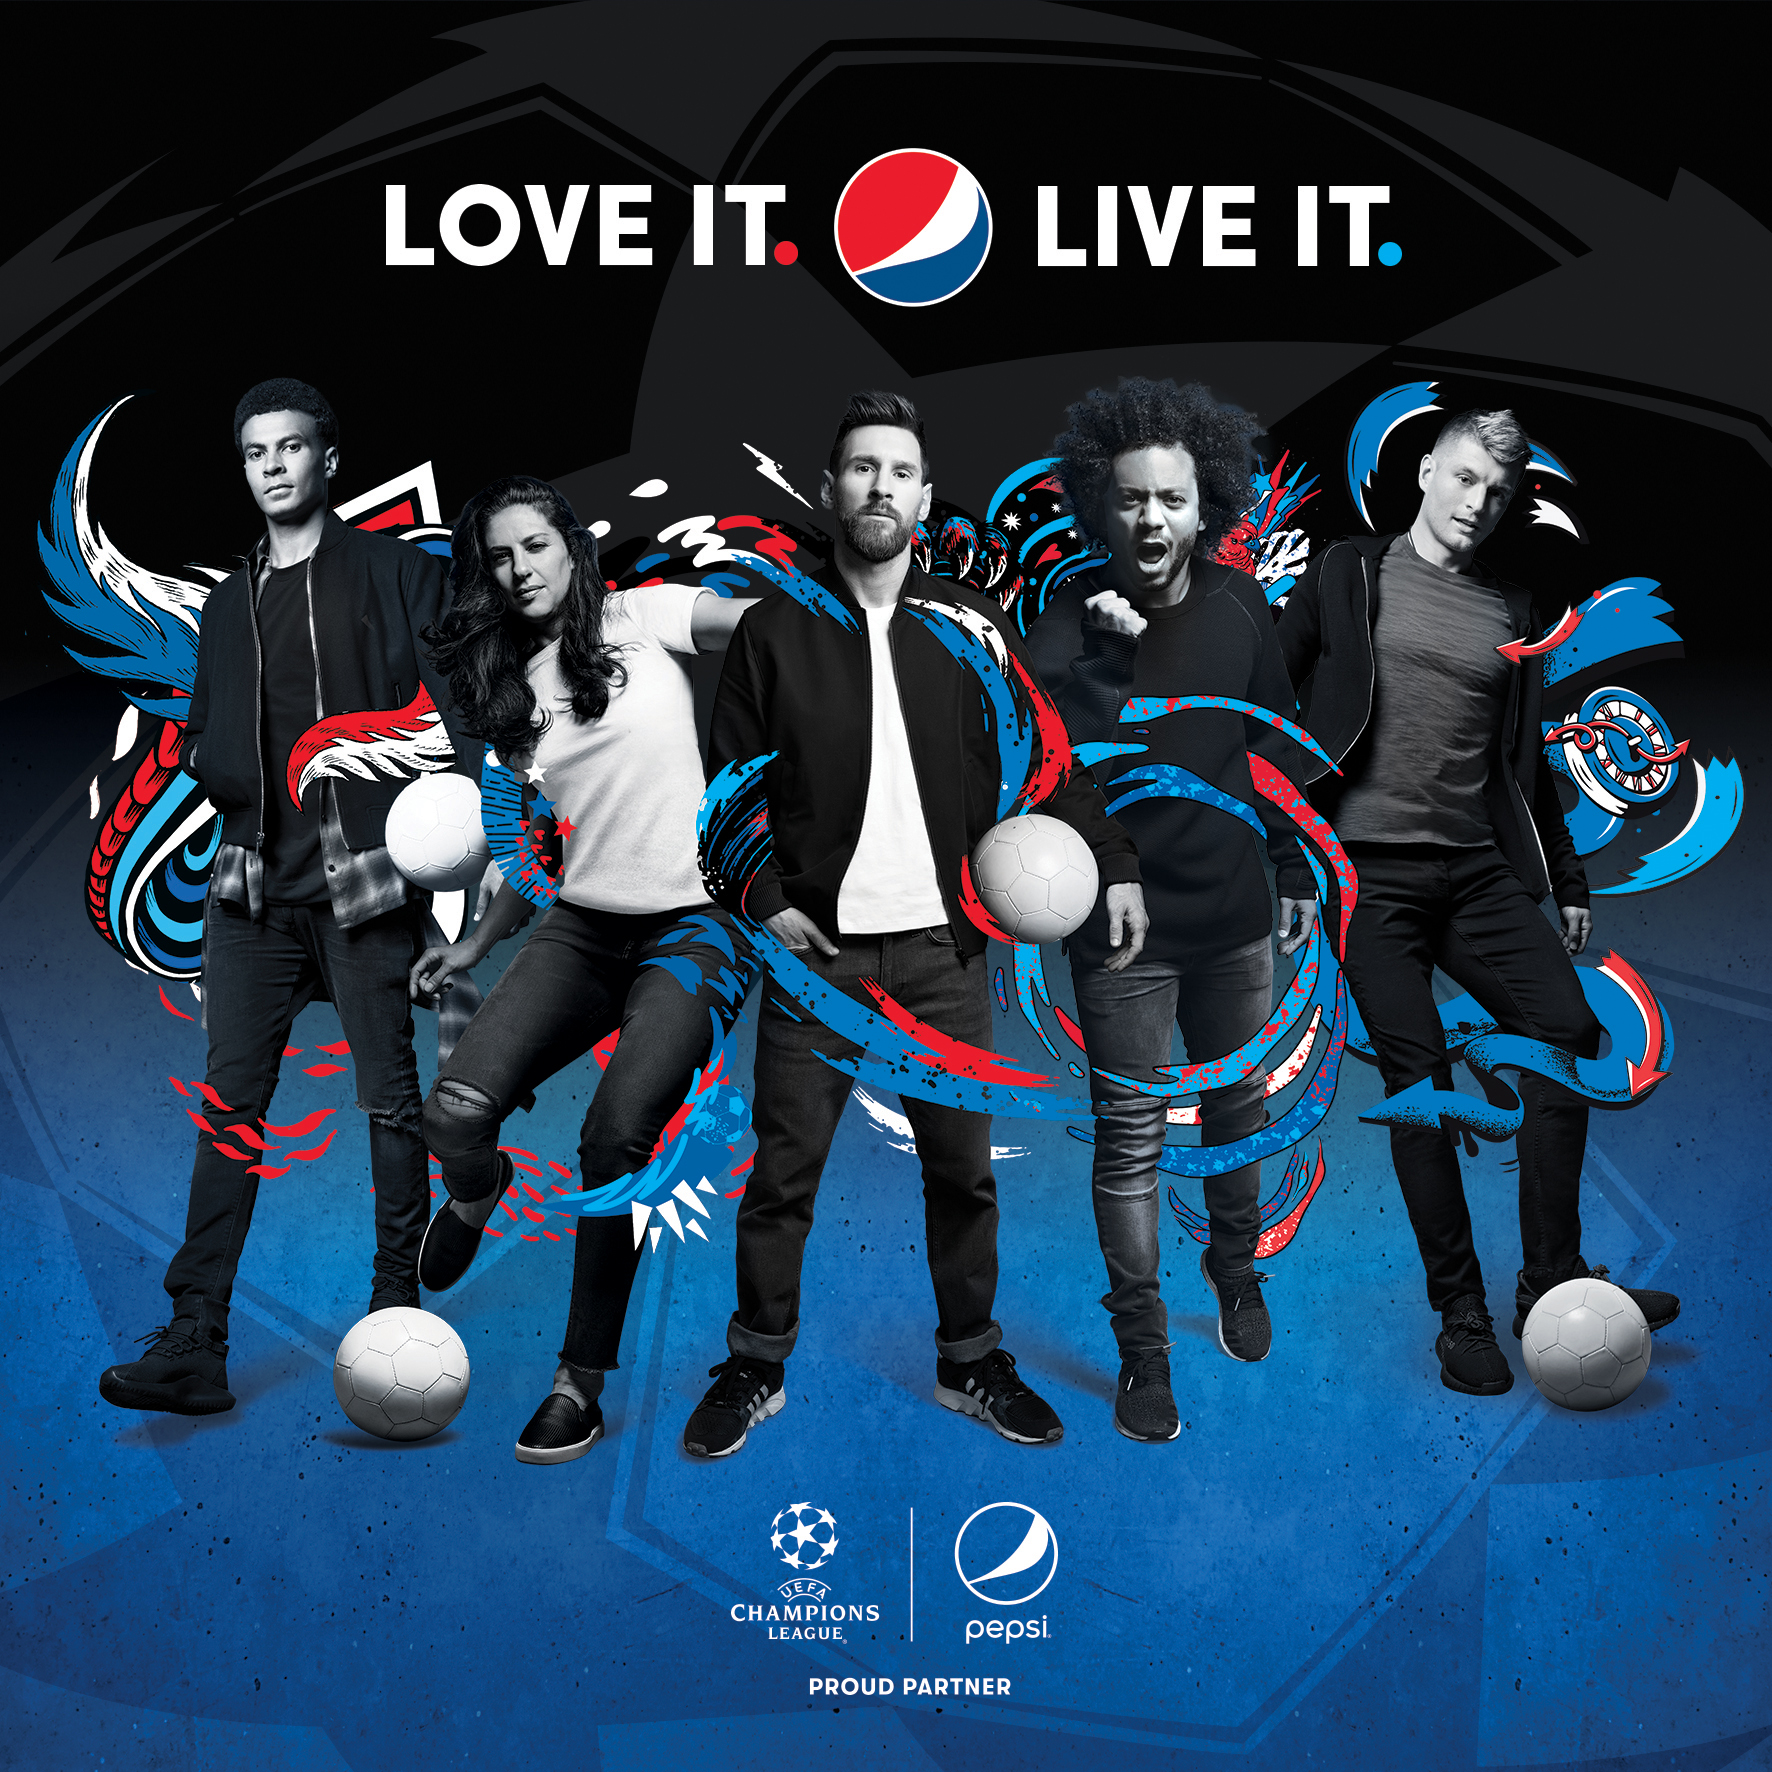 Pepsi lance sa nouvelle campagne "Love it. Live it. Football" avec